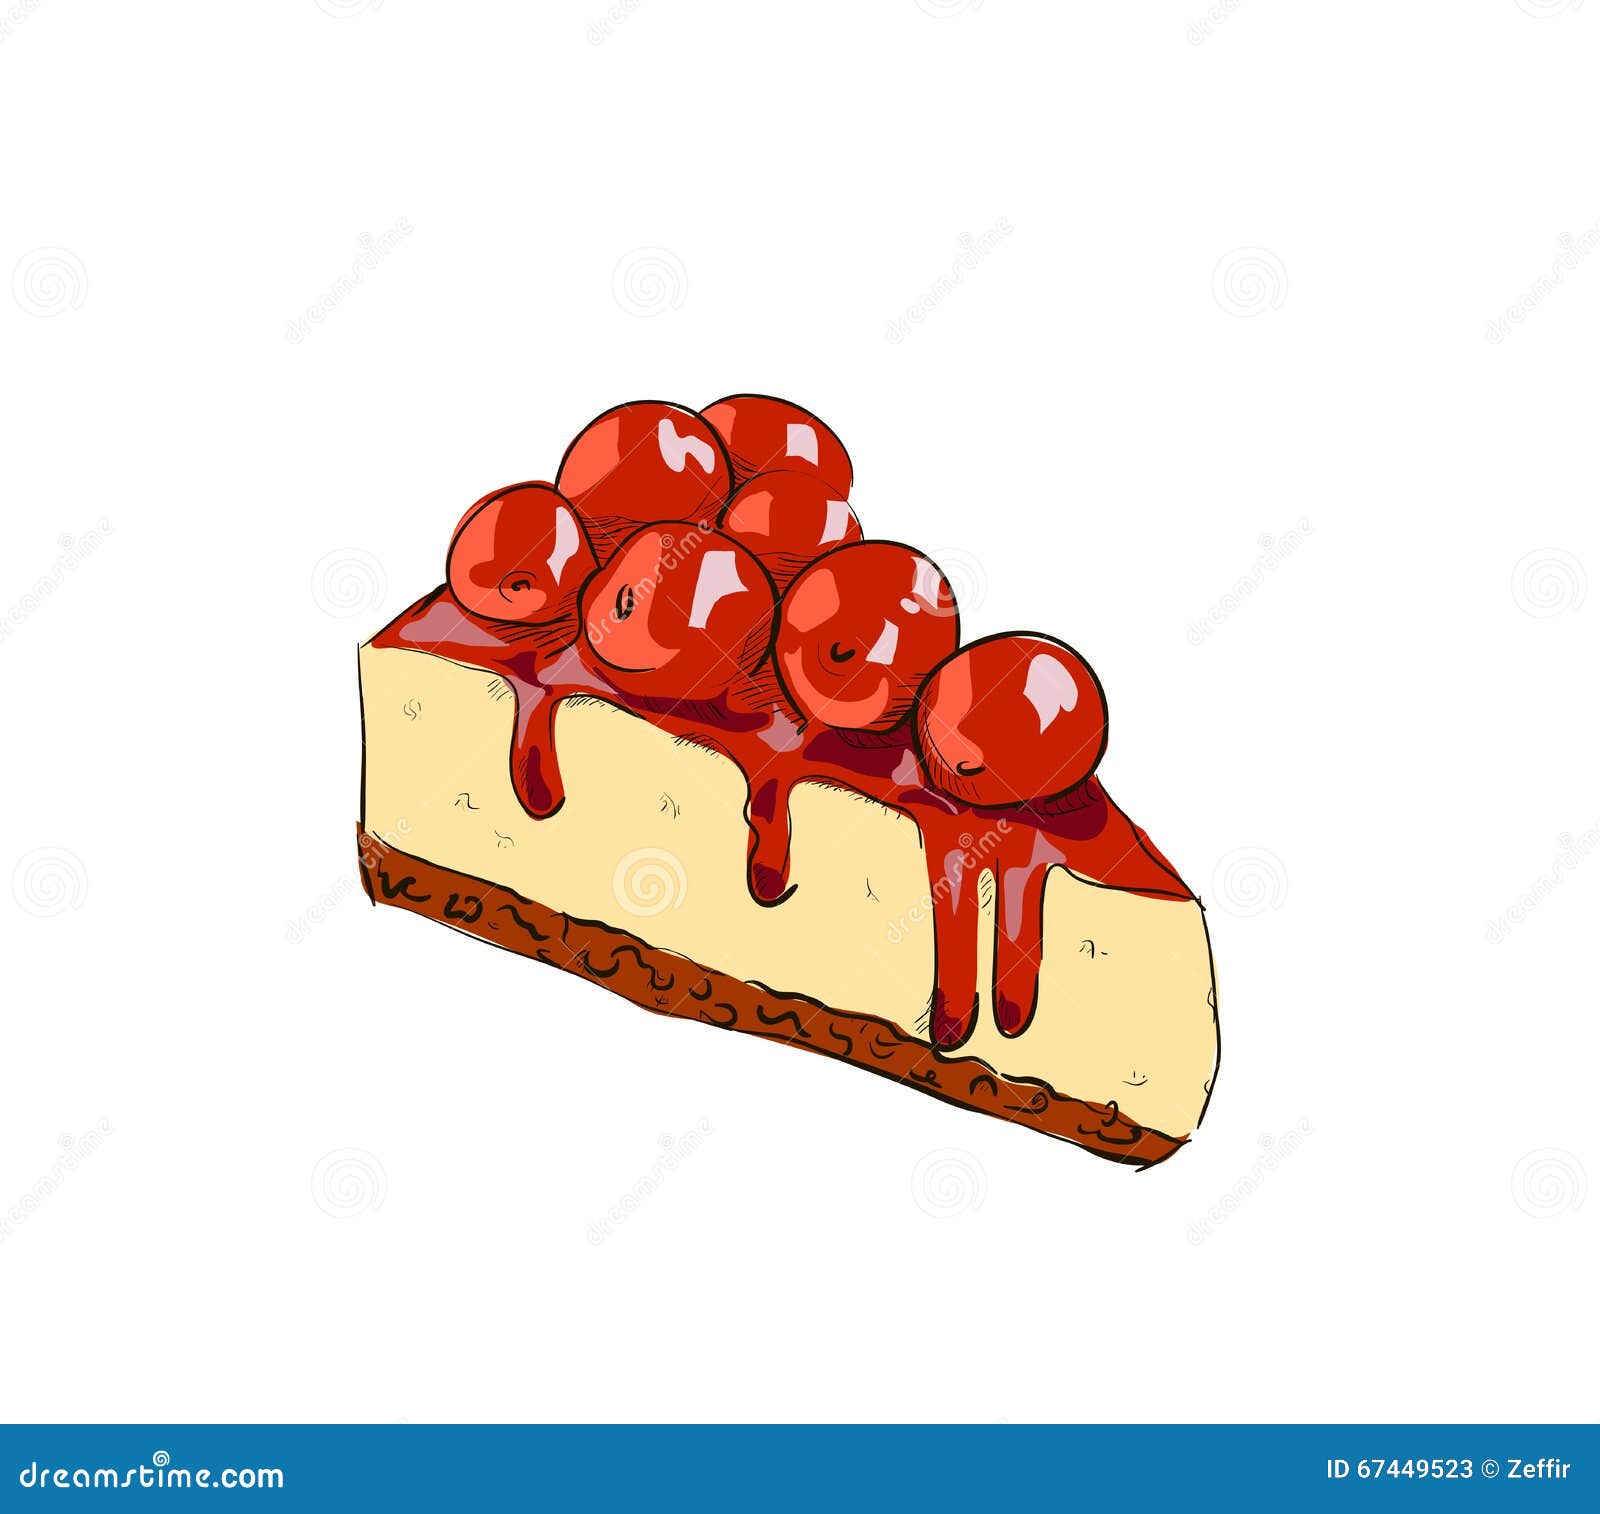 Cheesecake: Cheesecake Drawing